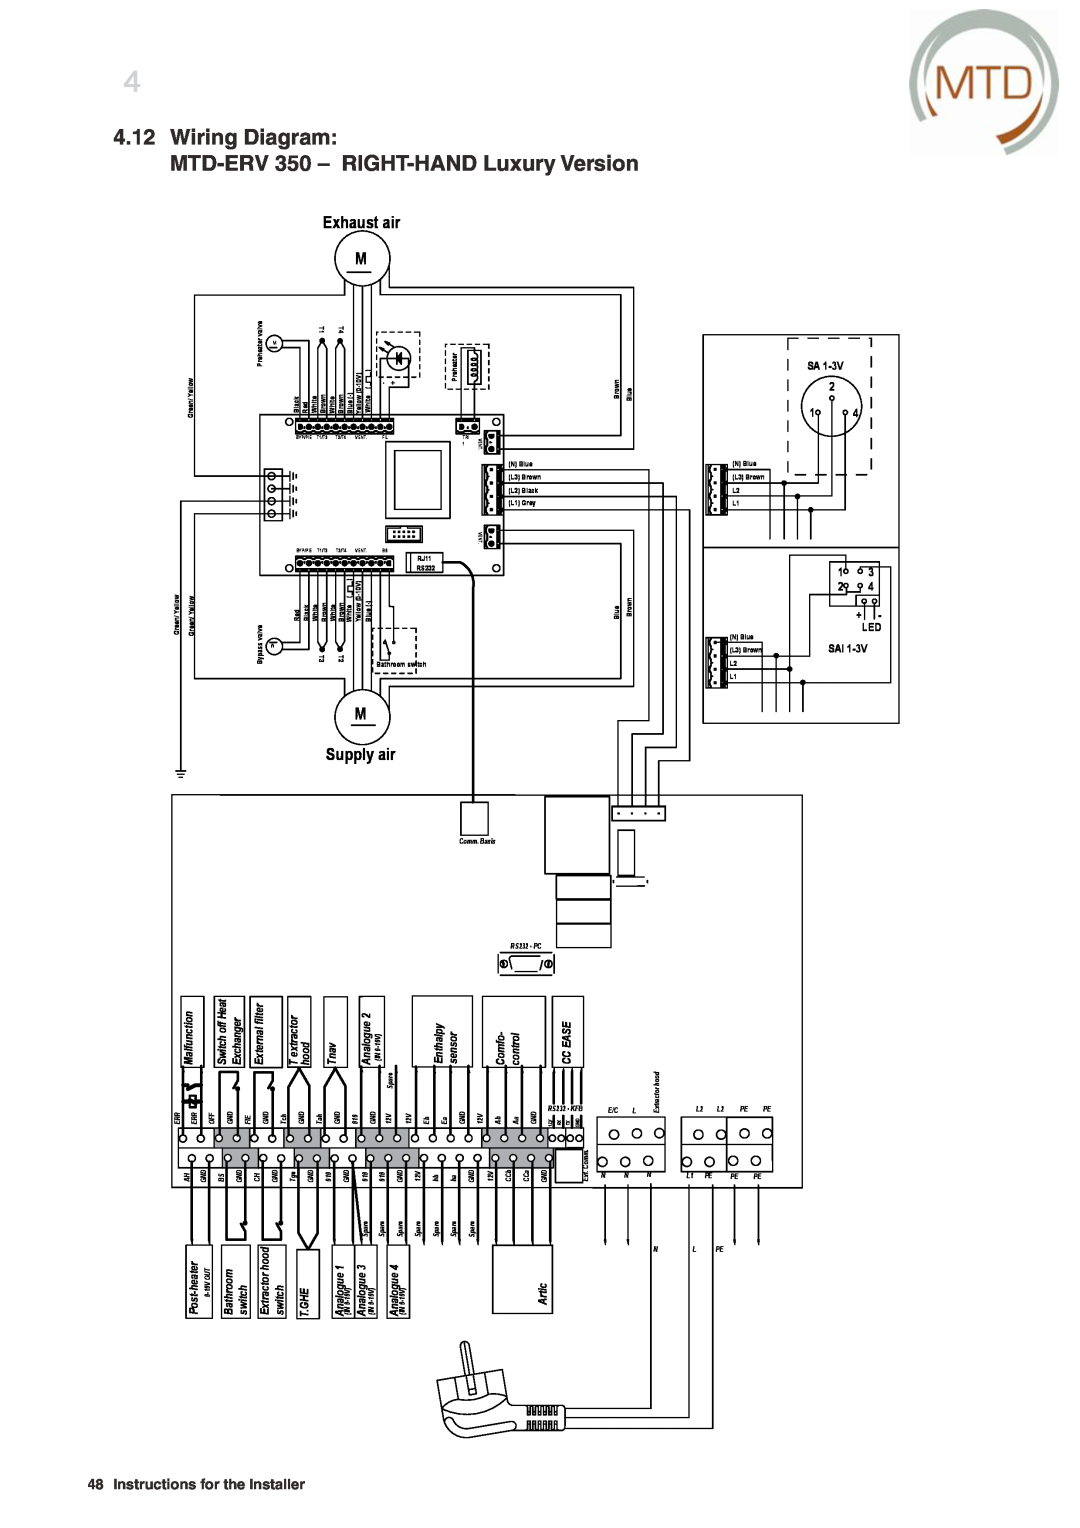 MTD ERV 365 manual Wiring Diagram MTD-ERV 350 - RIGHT-HAND Luxury Version, Exhaust air M, M Supply air, + Led 